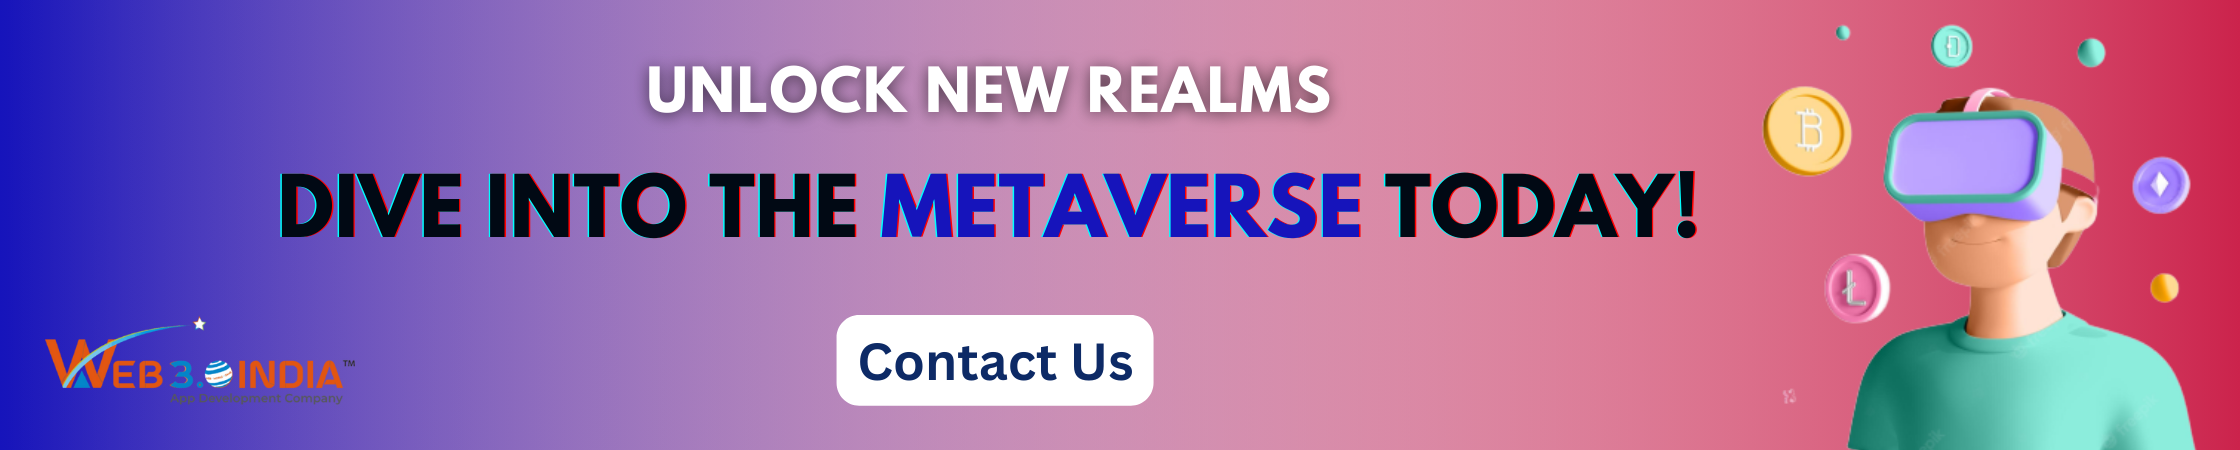 Metaverse Development Company - Web 3.0 India